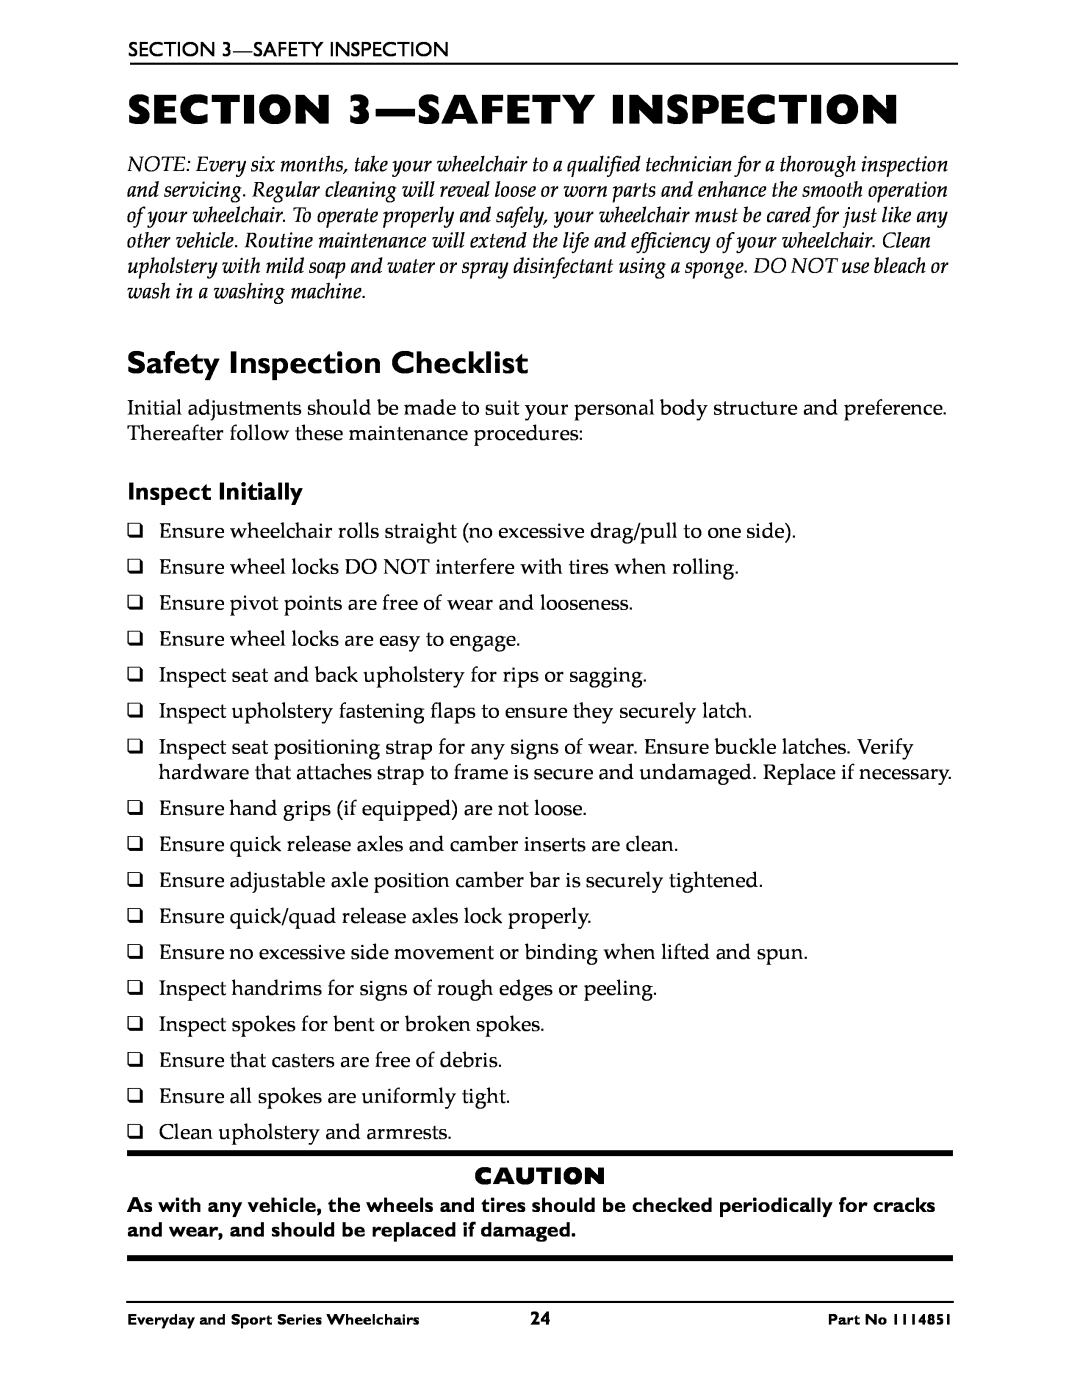 Invacare X-Terminator Titanium, X-Terminator QR, T-5 Tennis Elite manual Safety Inspection Checklist, Inspect Initially 